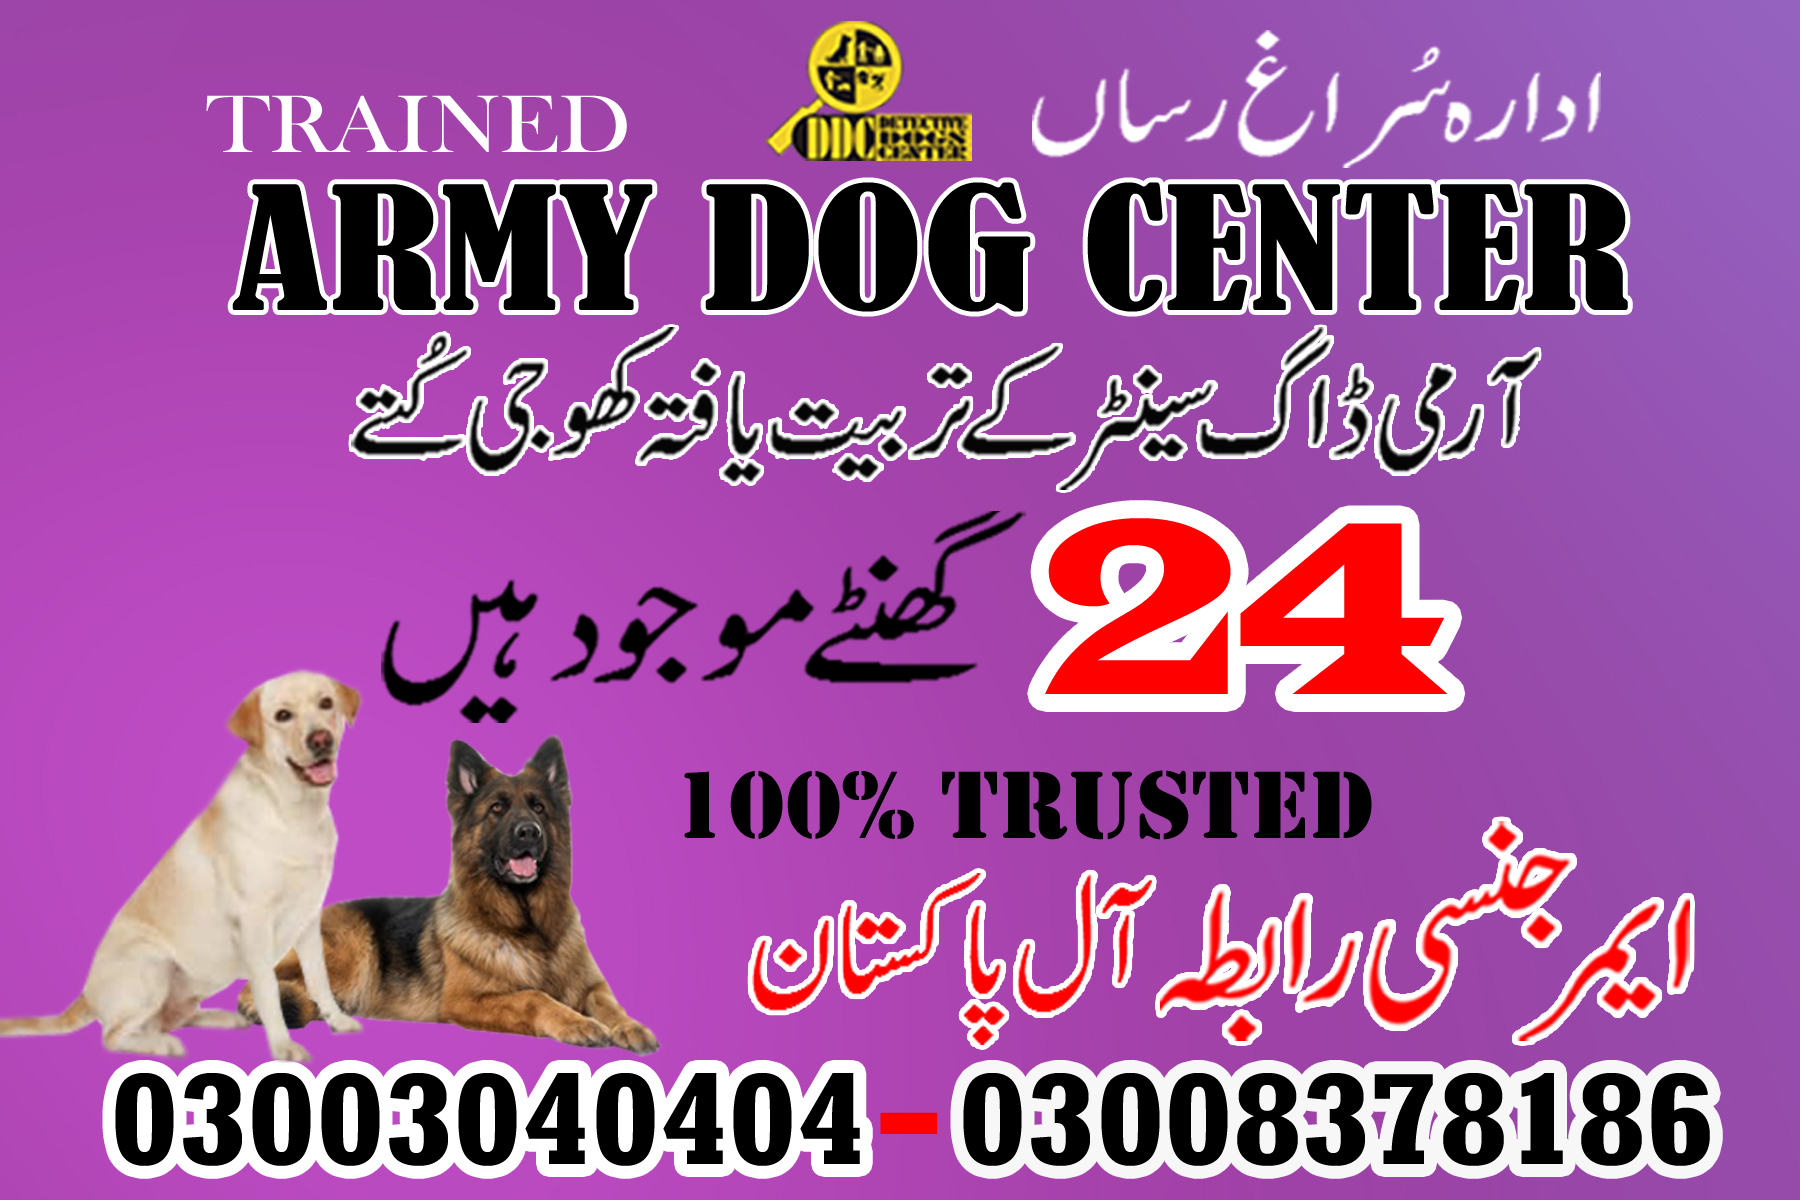 Army Dog Center Sargodha Headquarter